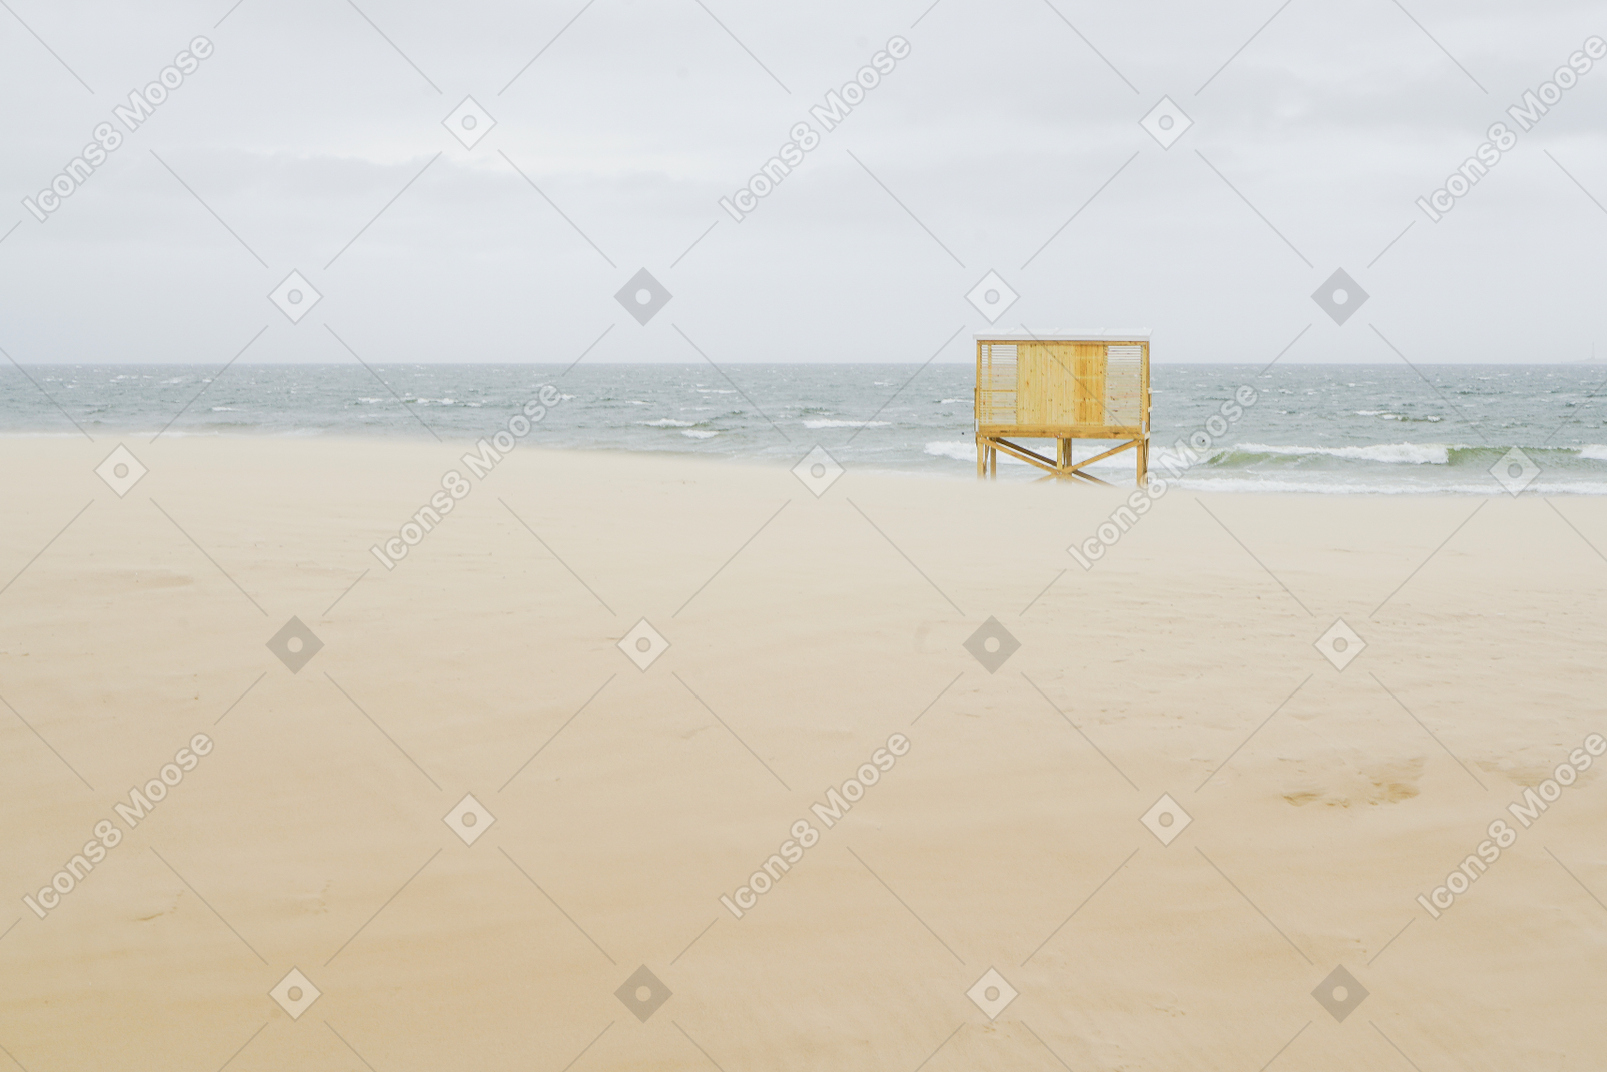 Seashore with a yellow beach hut